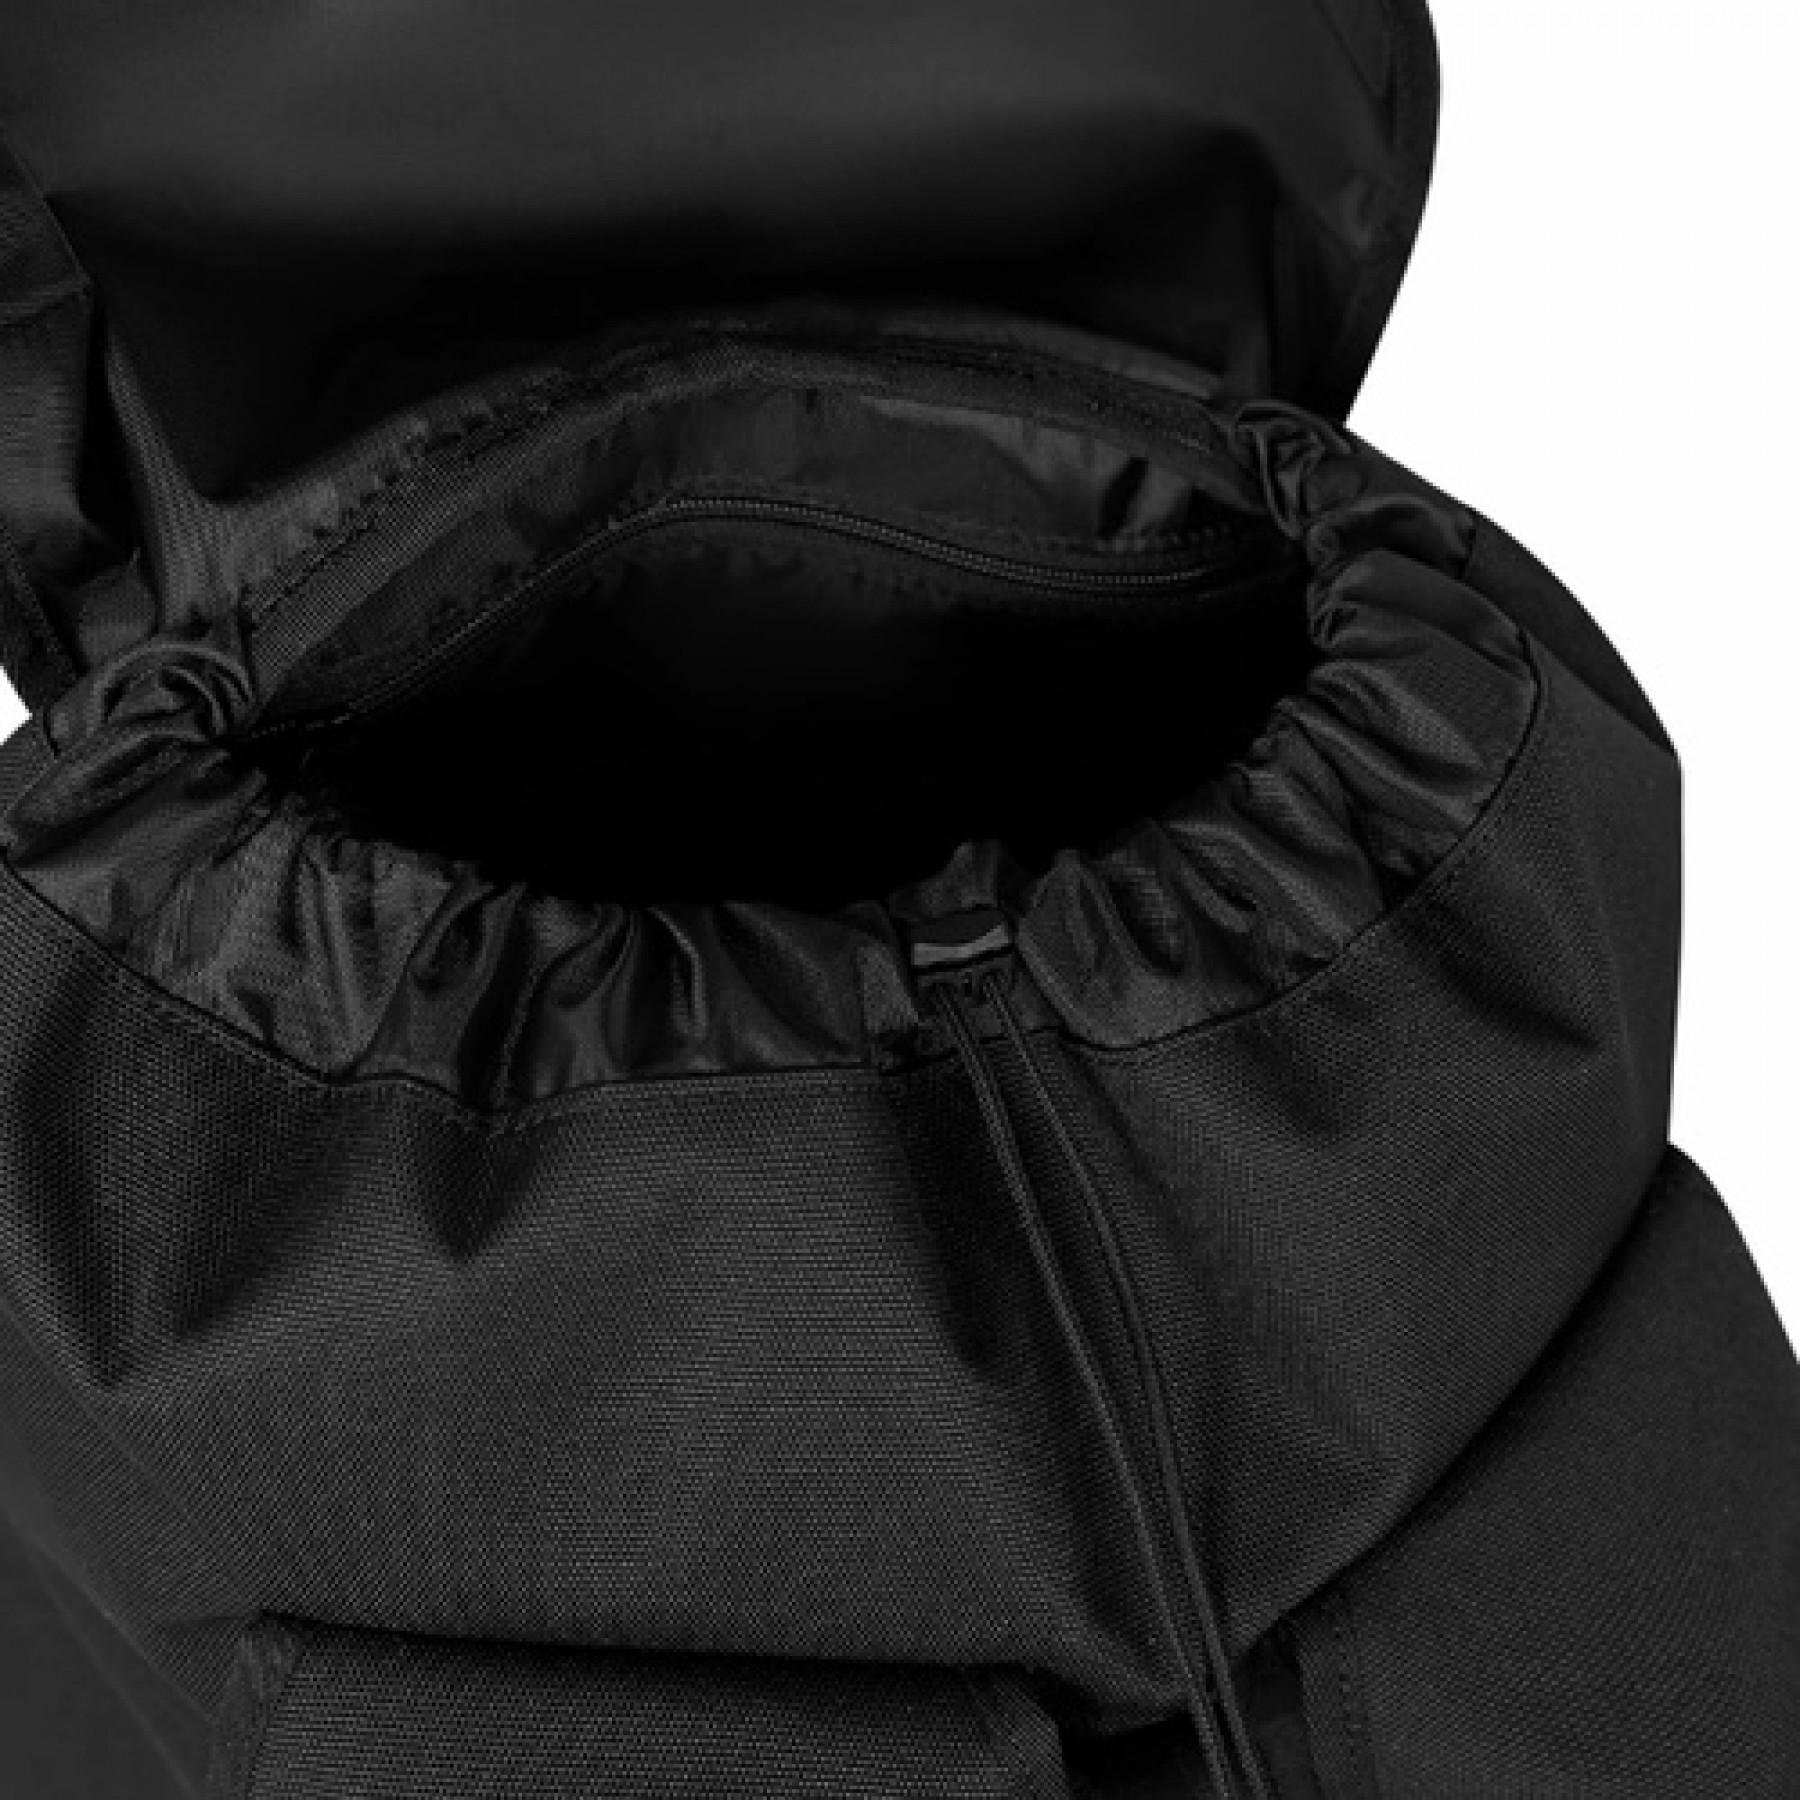 Backpack New Era Flat Top Bag